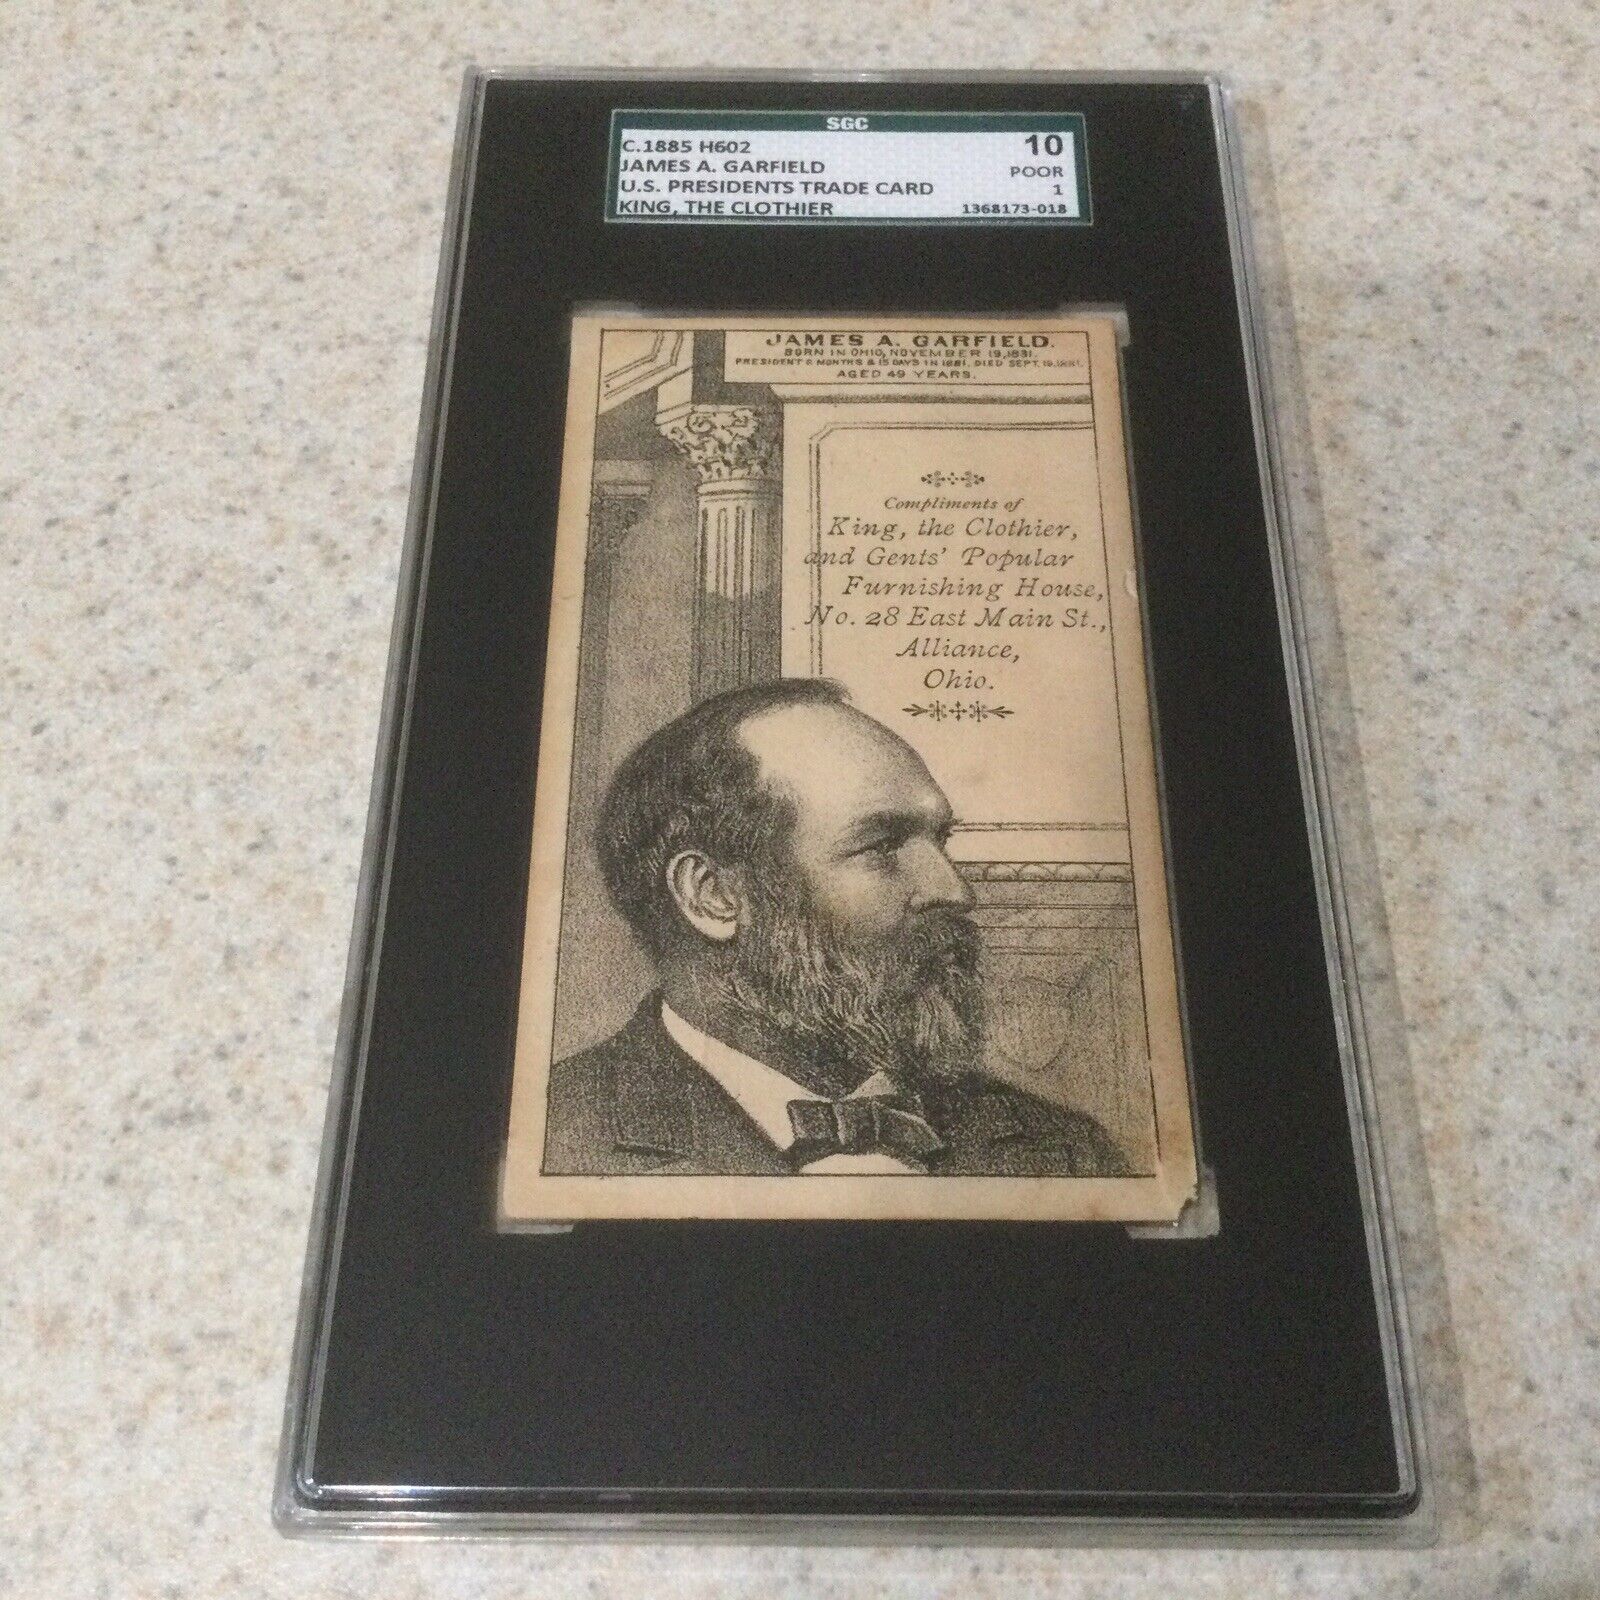 c.1885 H602 U.S. Presidents Trade Card - James A. Garfield SGC Poor 1